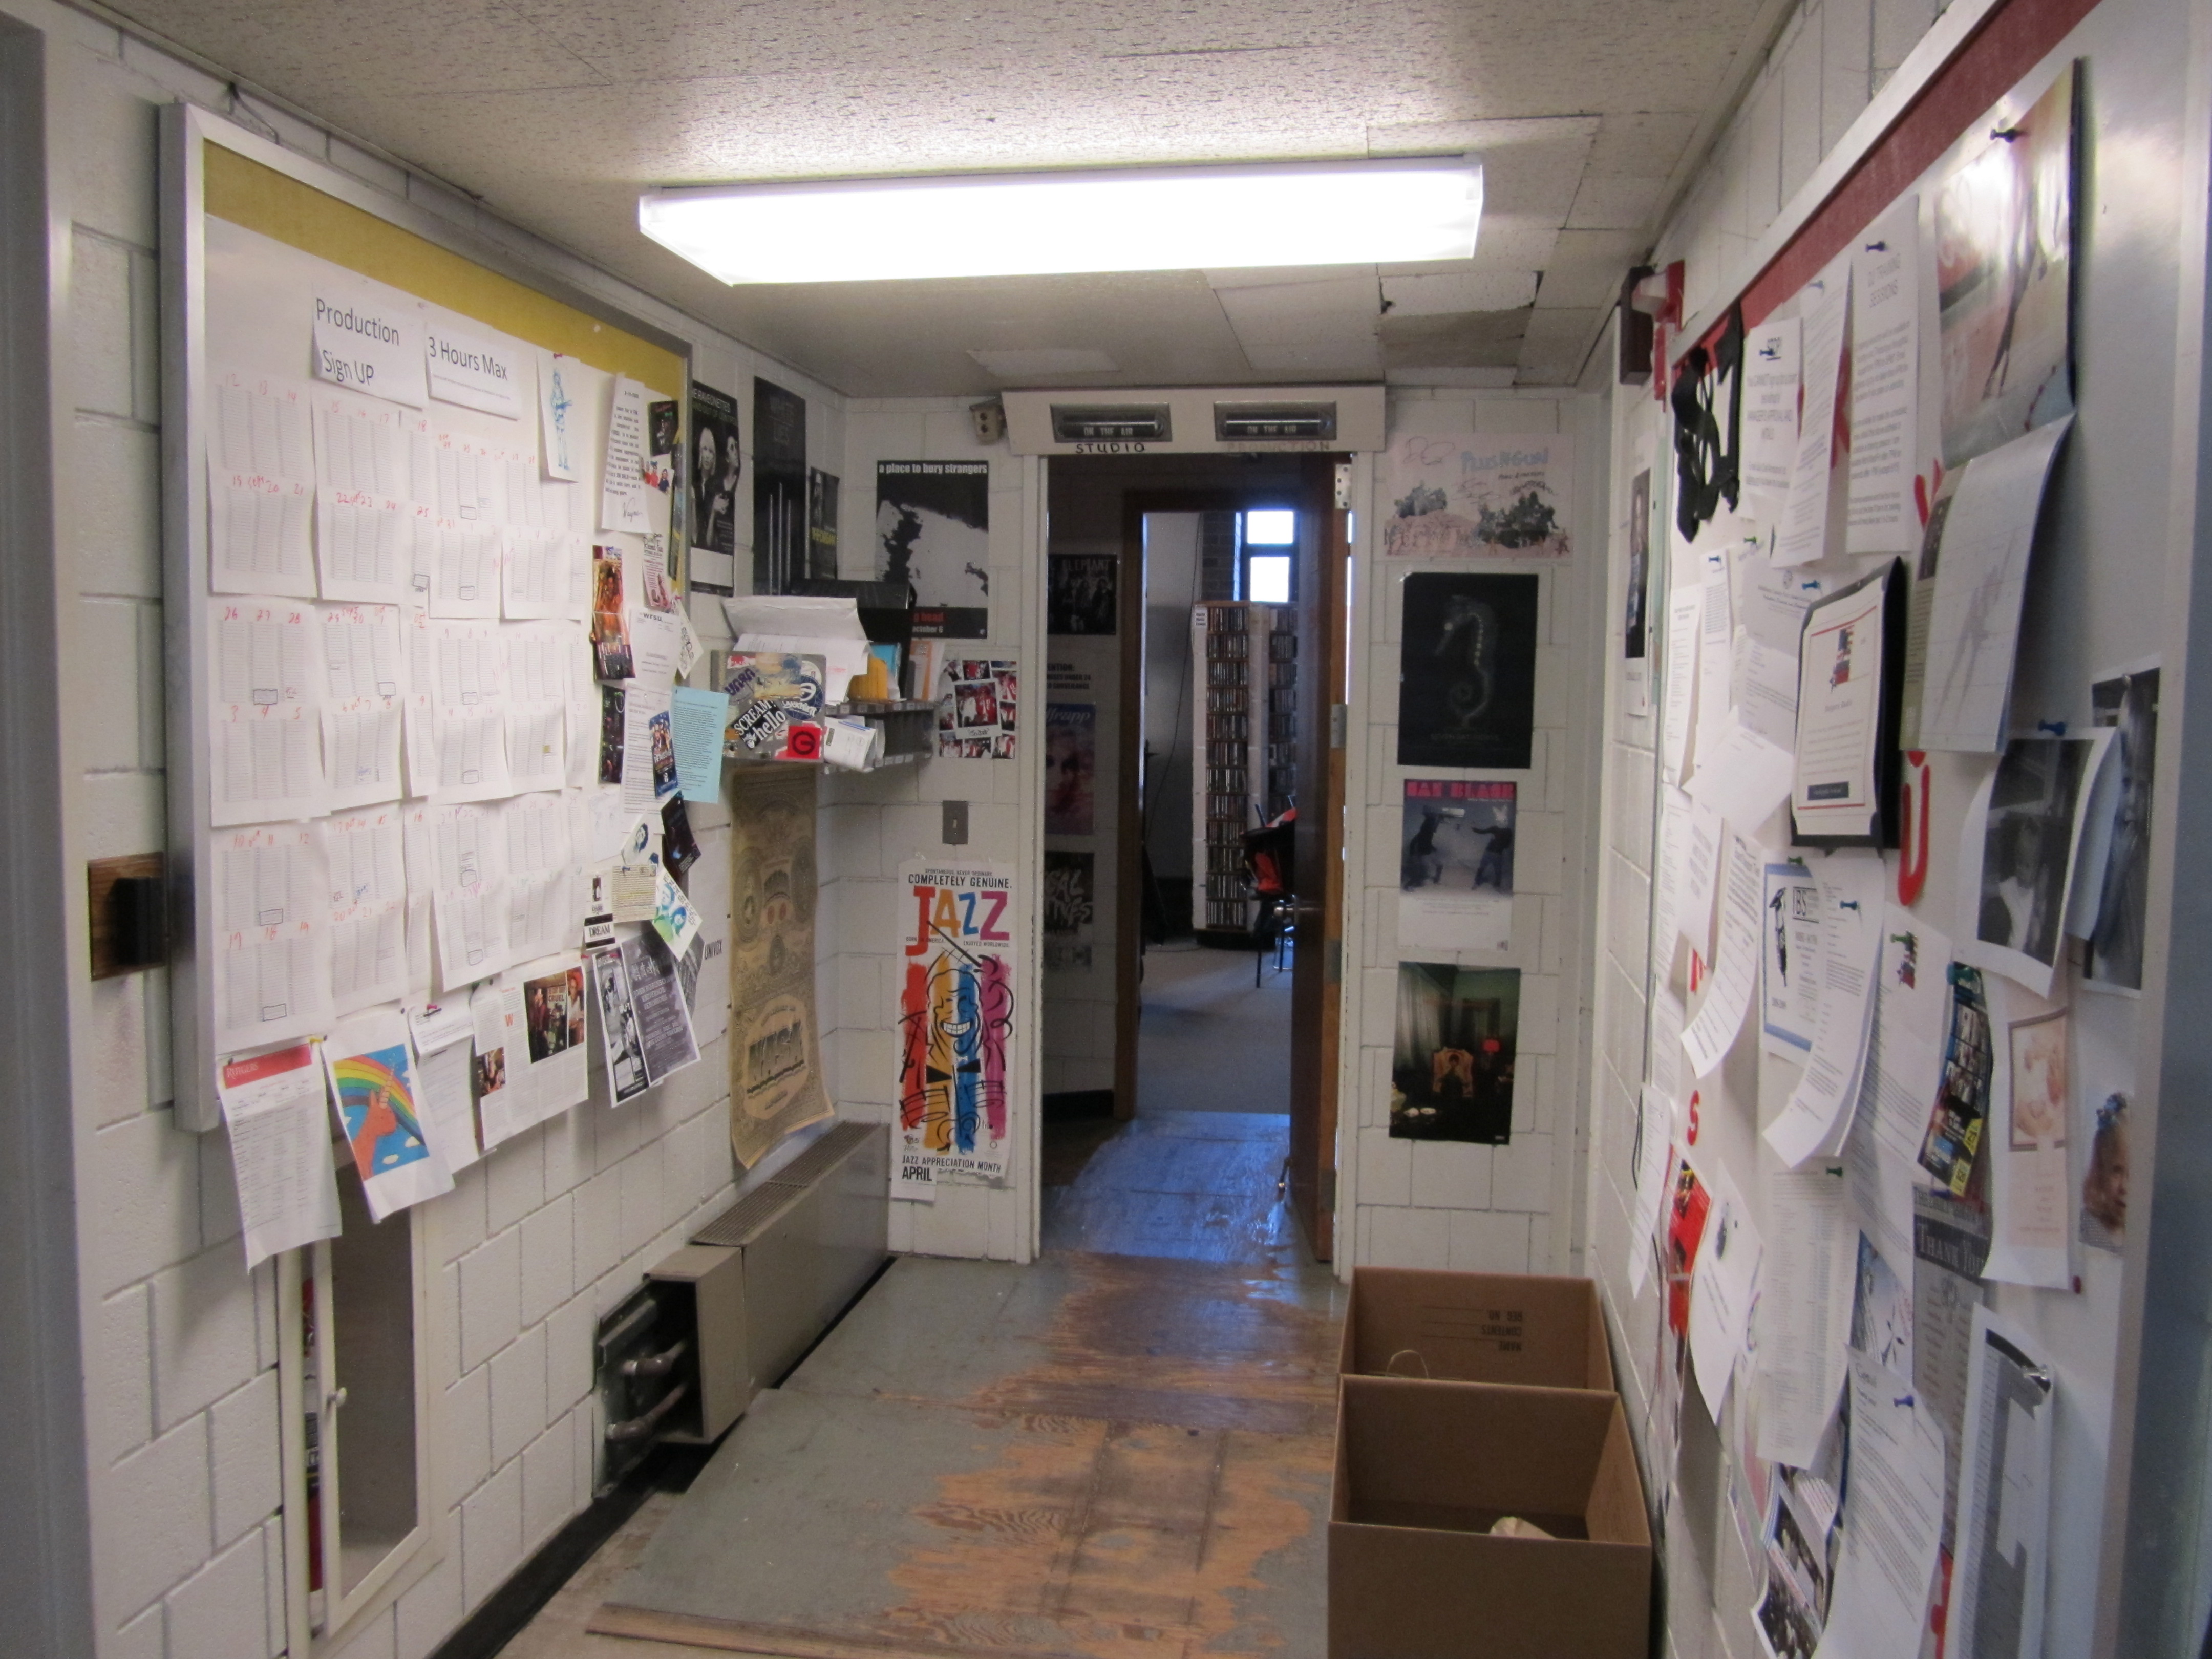 2010 Hallway to Production